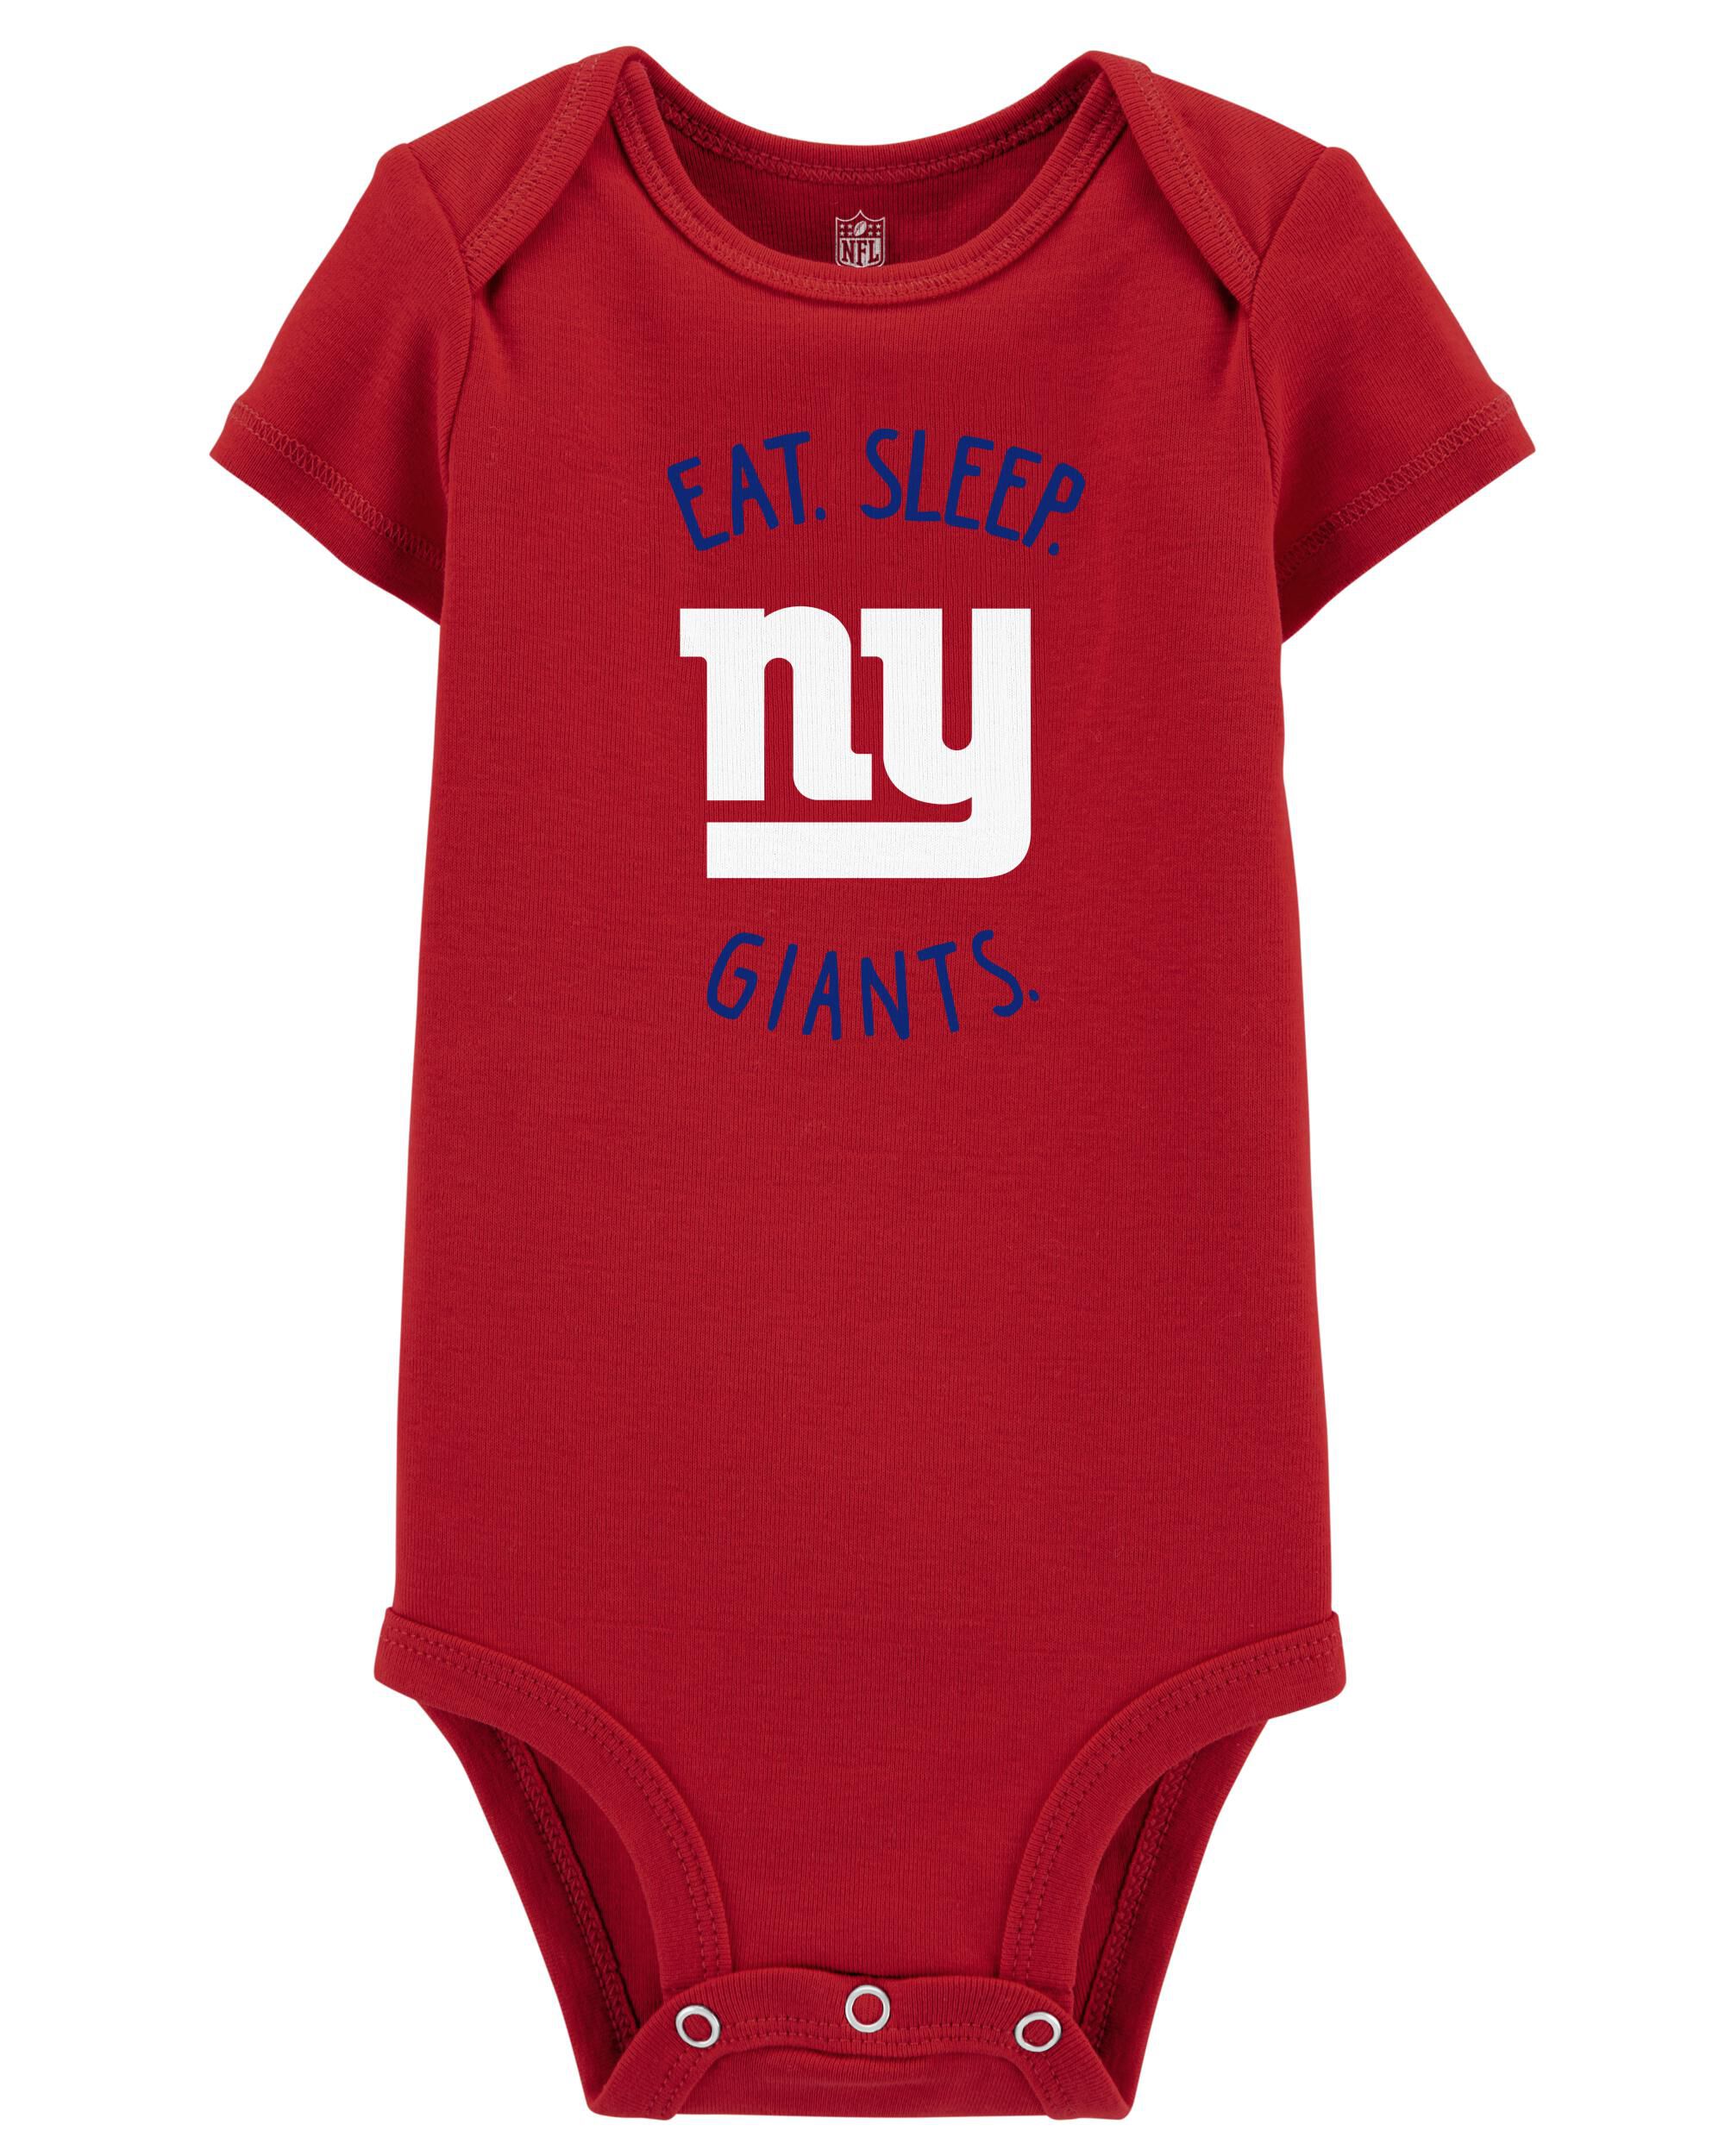 Carters Baby NFL New York Giants Bodysuit